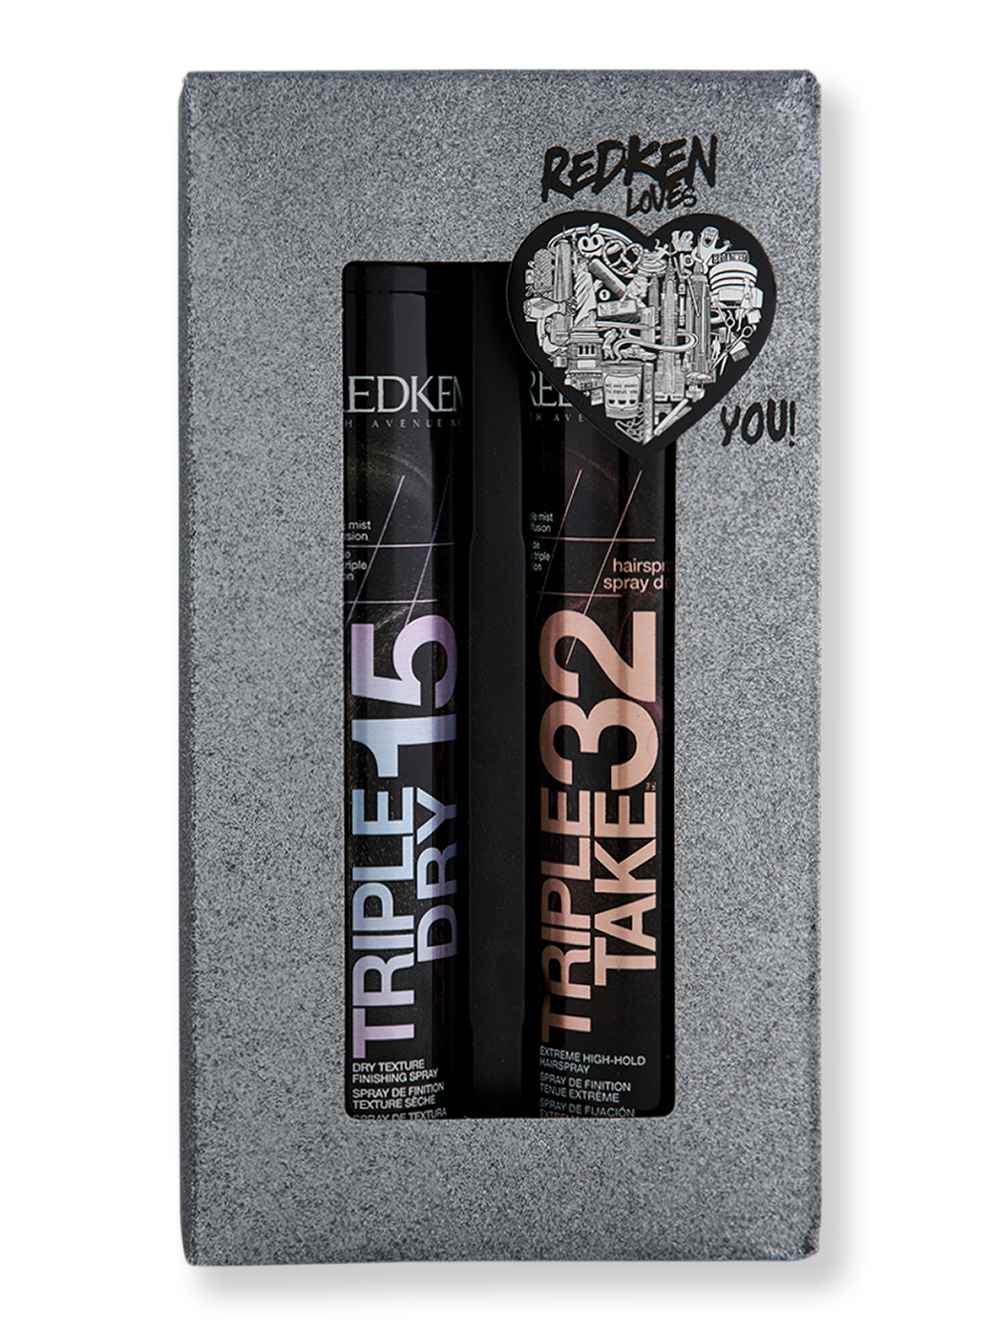 Redken Redken Styling Triple Duo Gift Set Hair Care Value Sets 